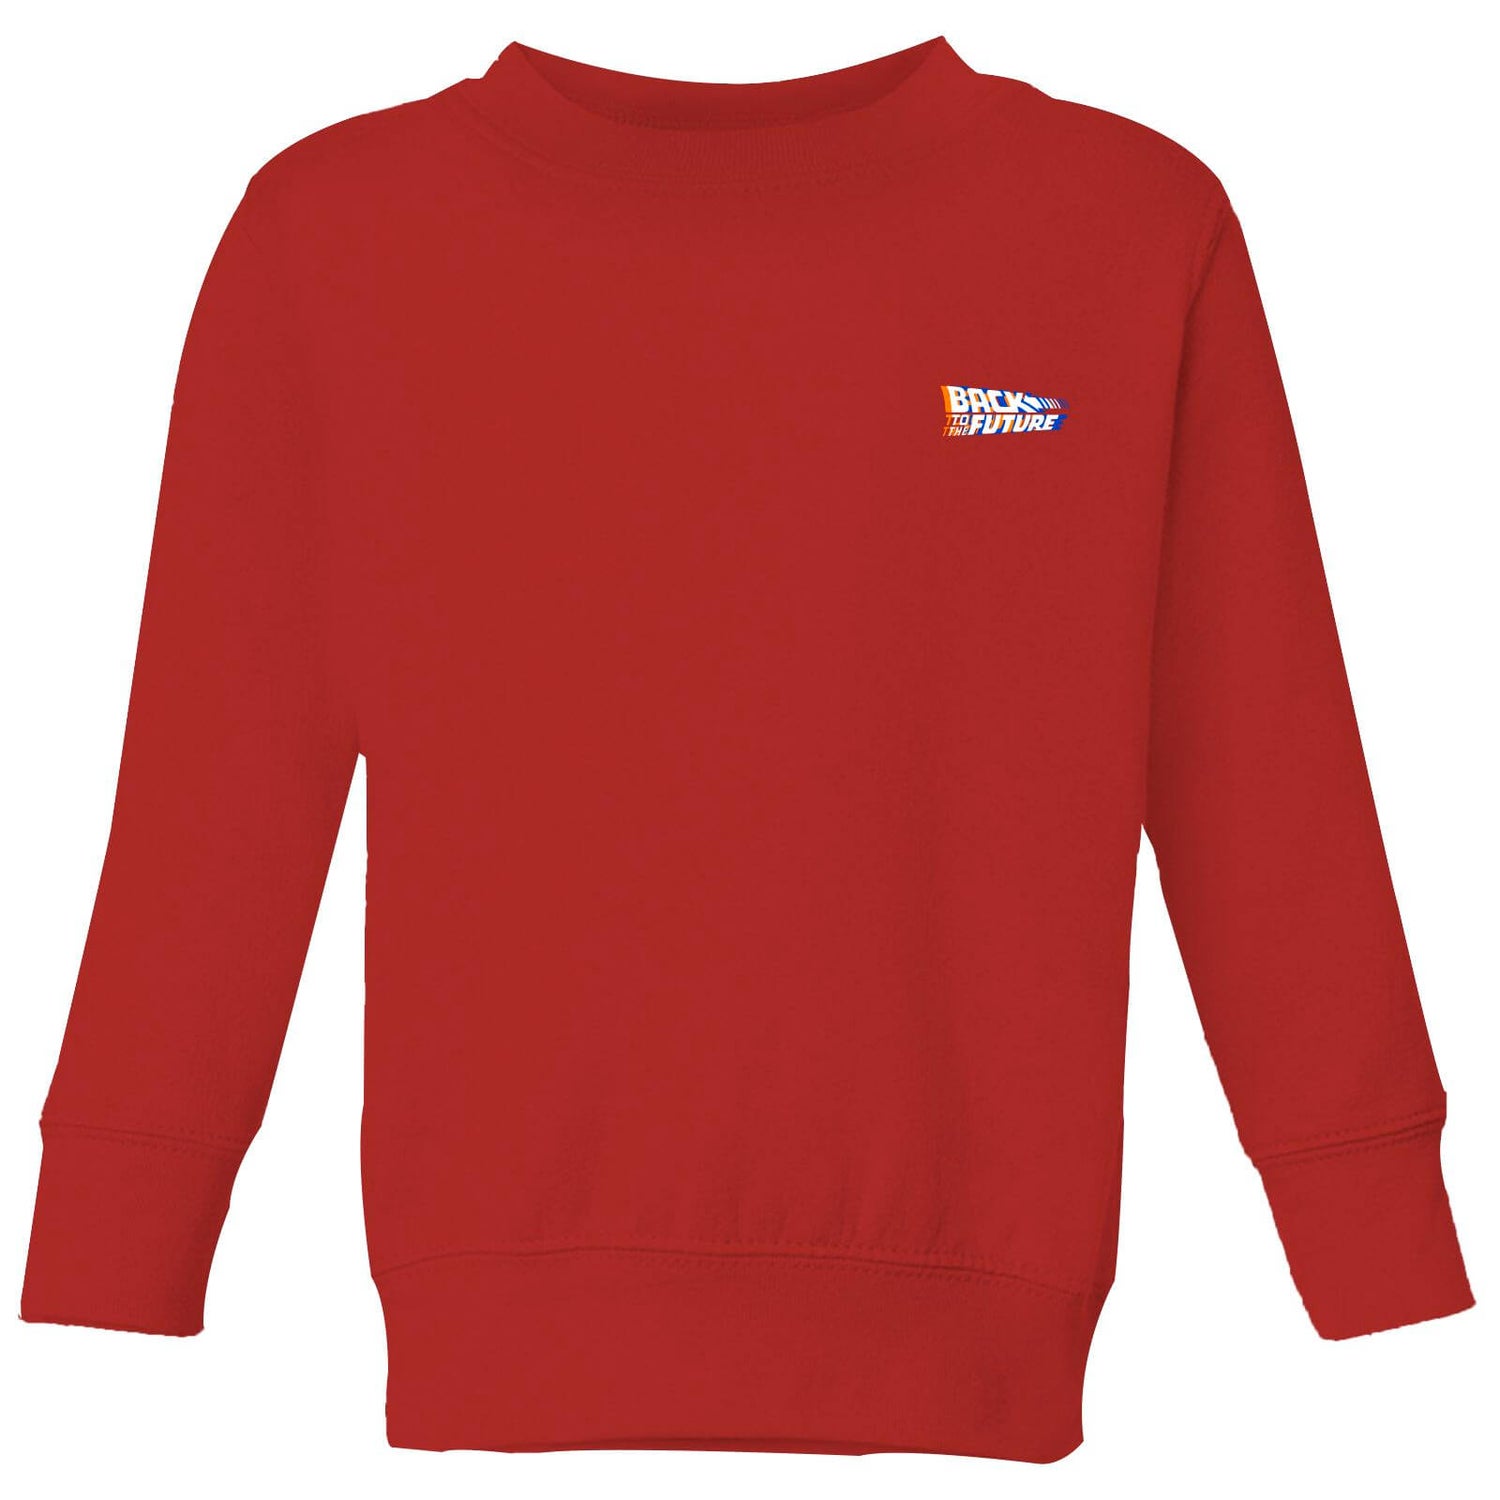 Back To The Future Kids' Sweatshirt - Red